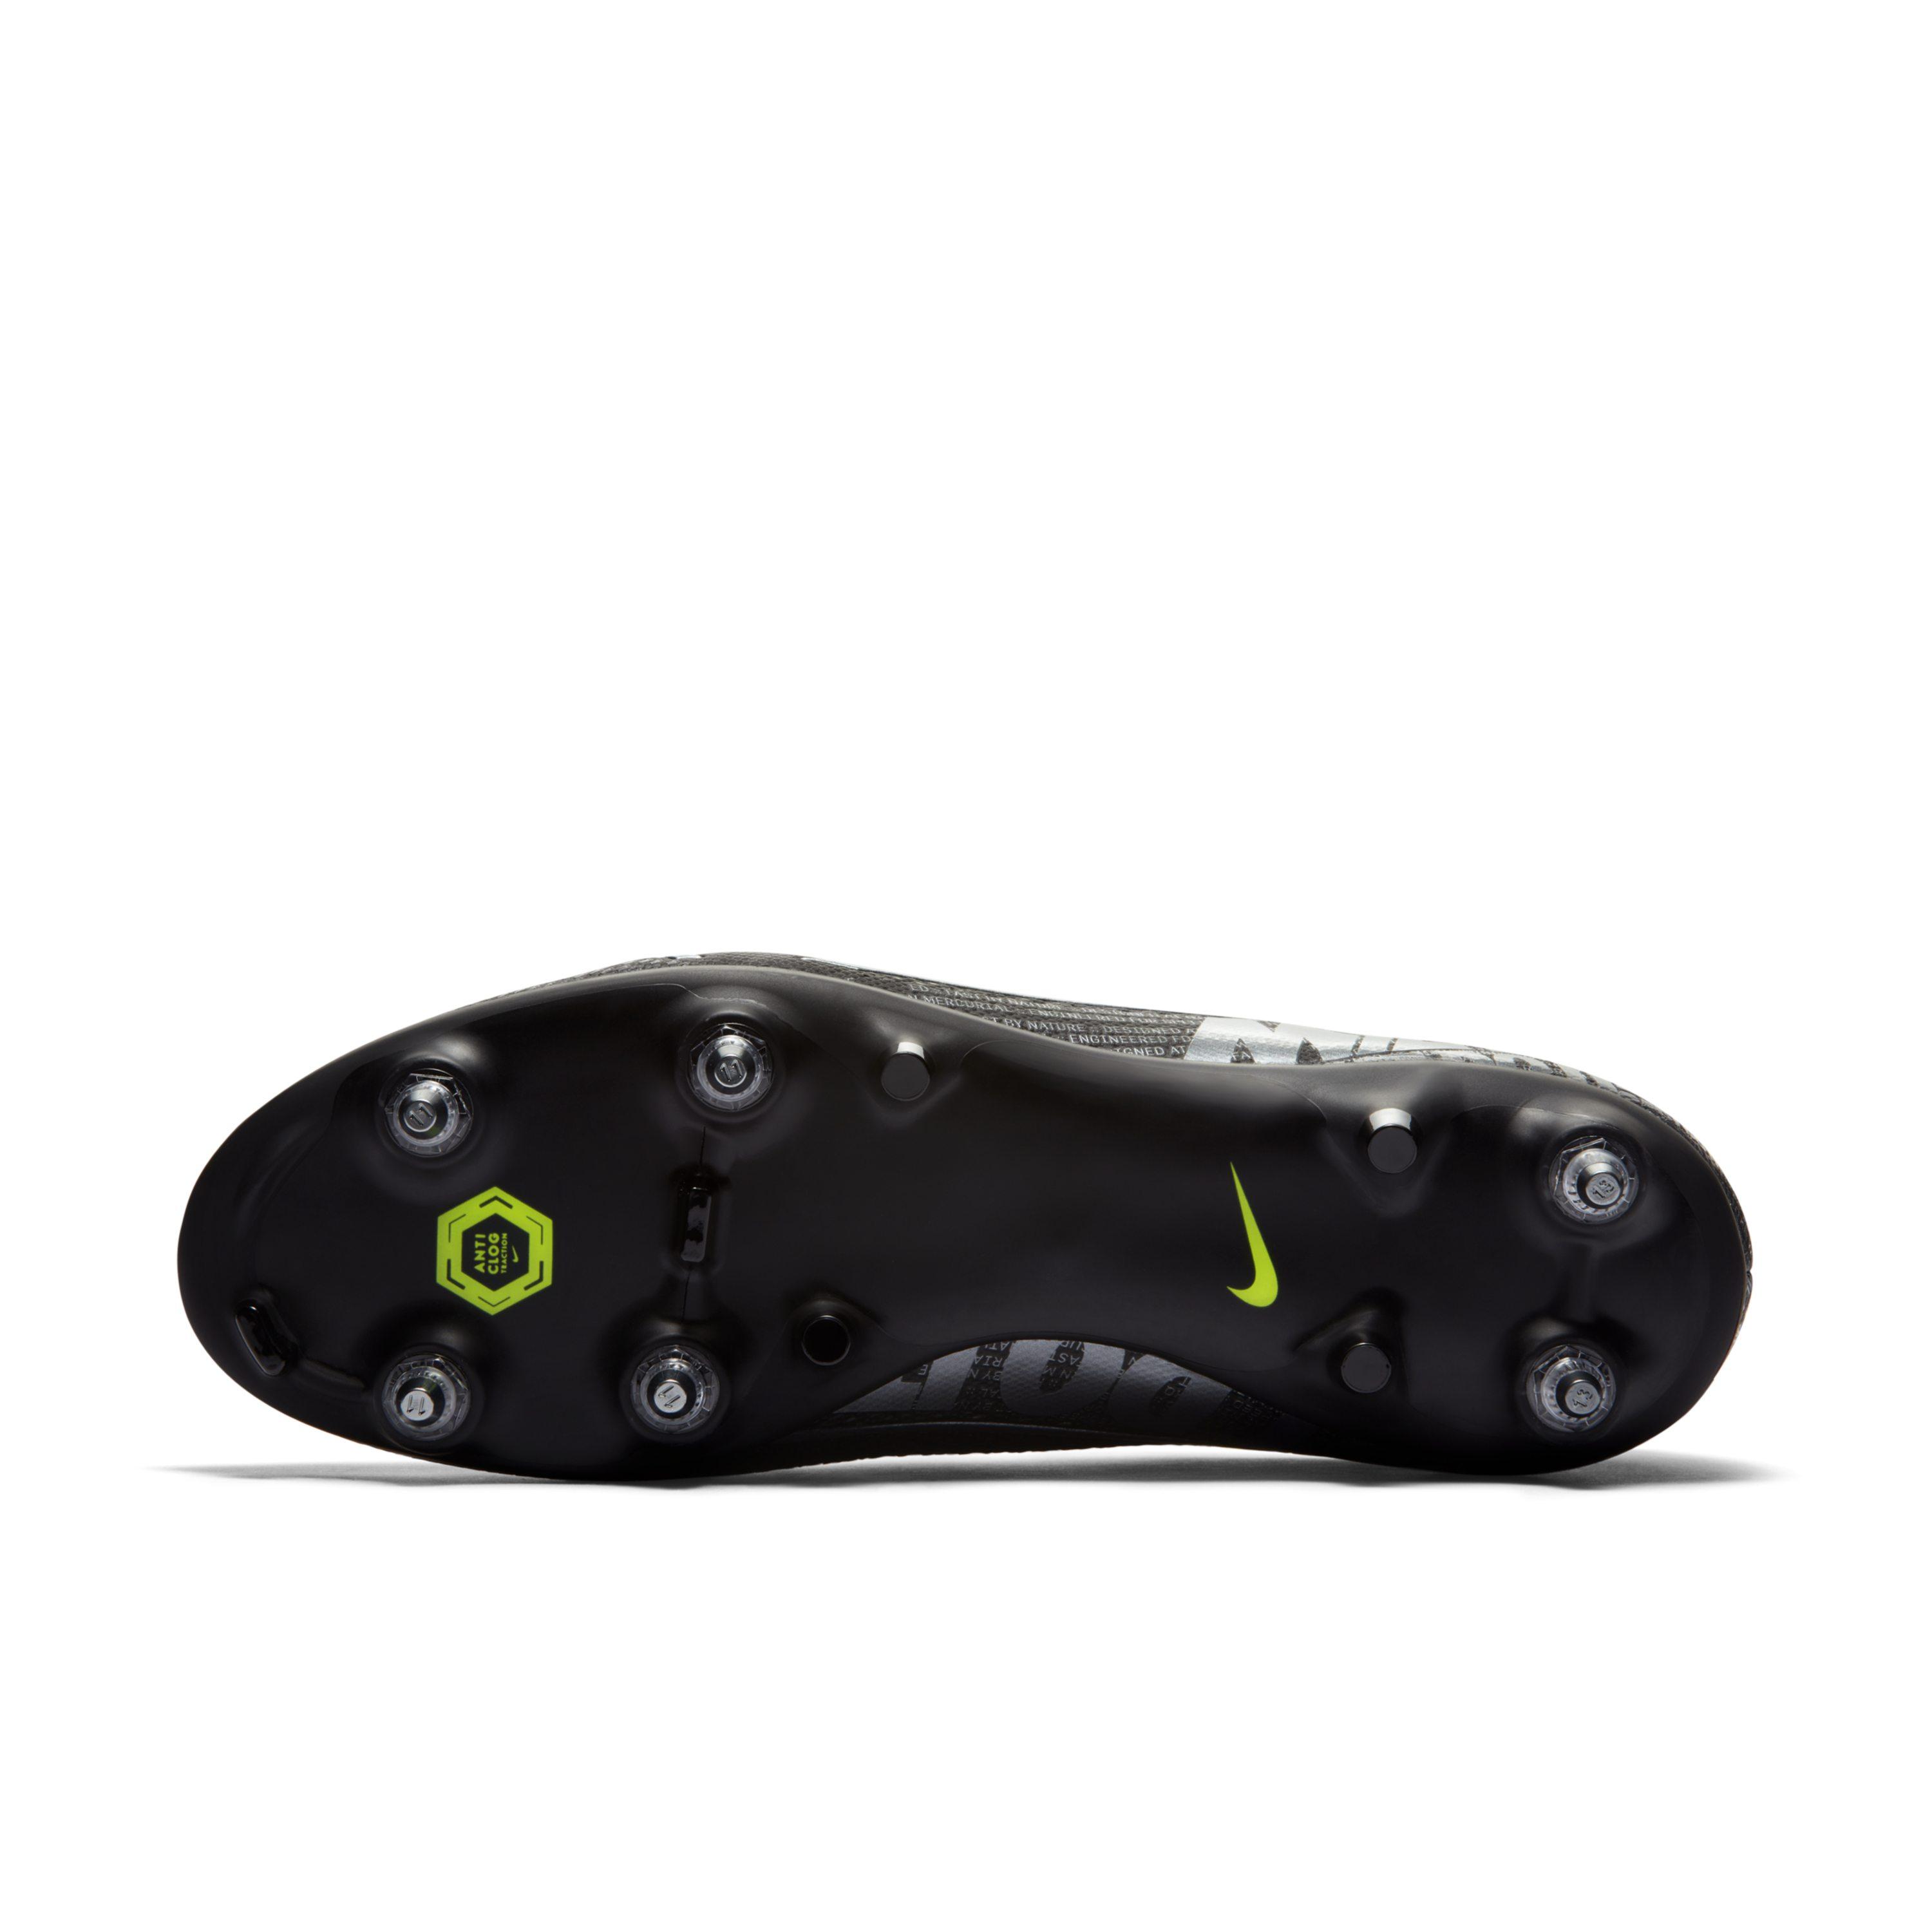 Nike Mercurial Vapor Flyknit Ultra FG Soccer Cleats Black